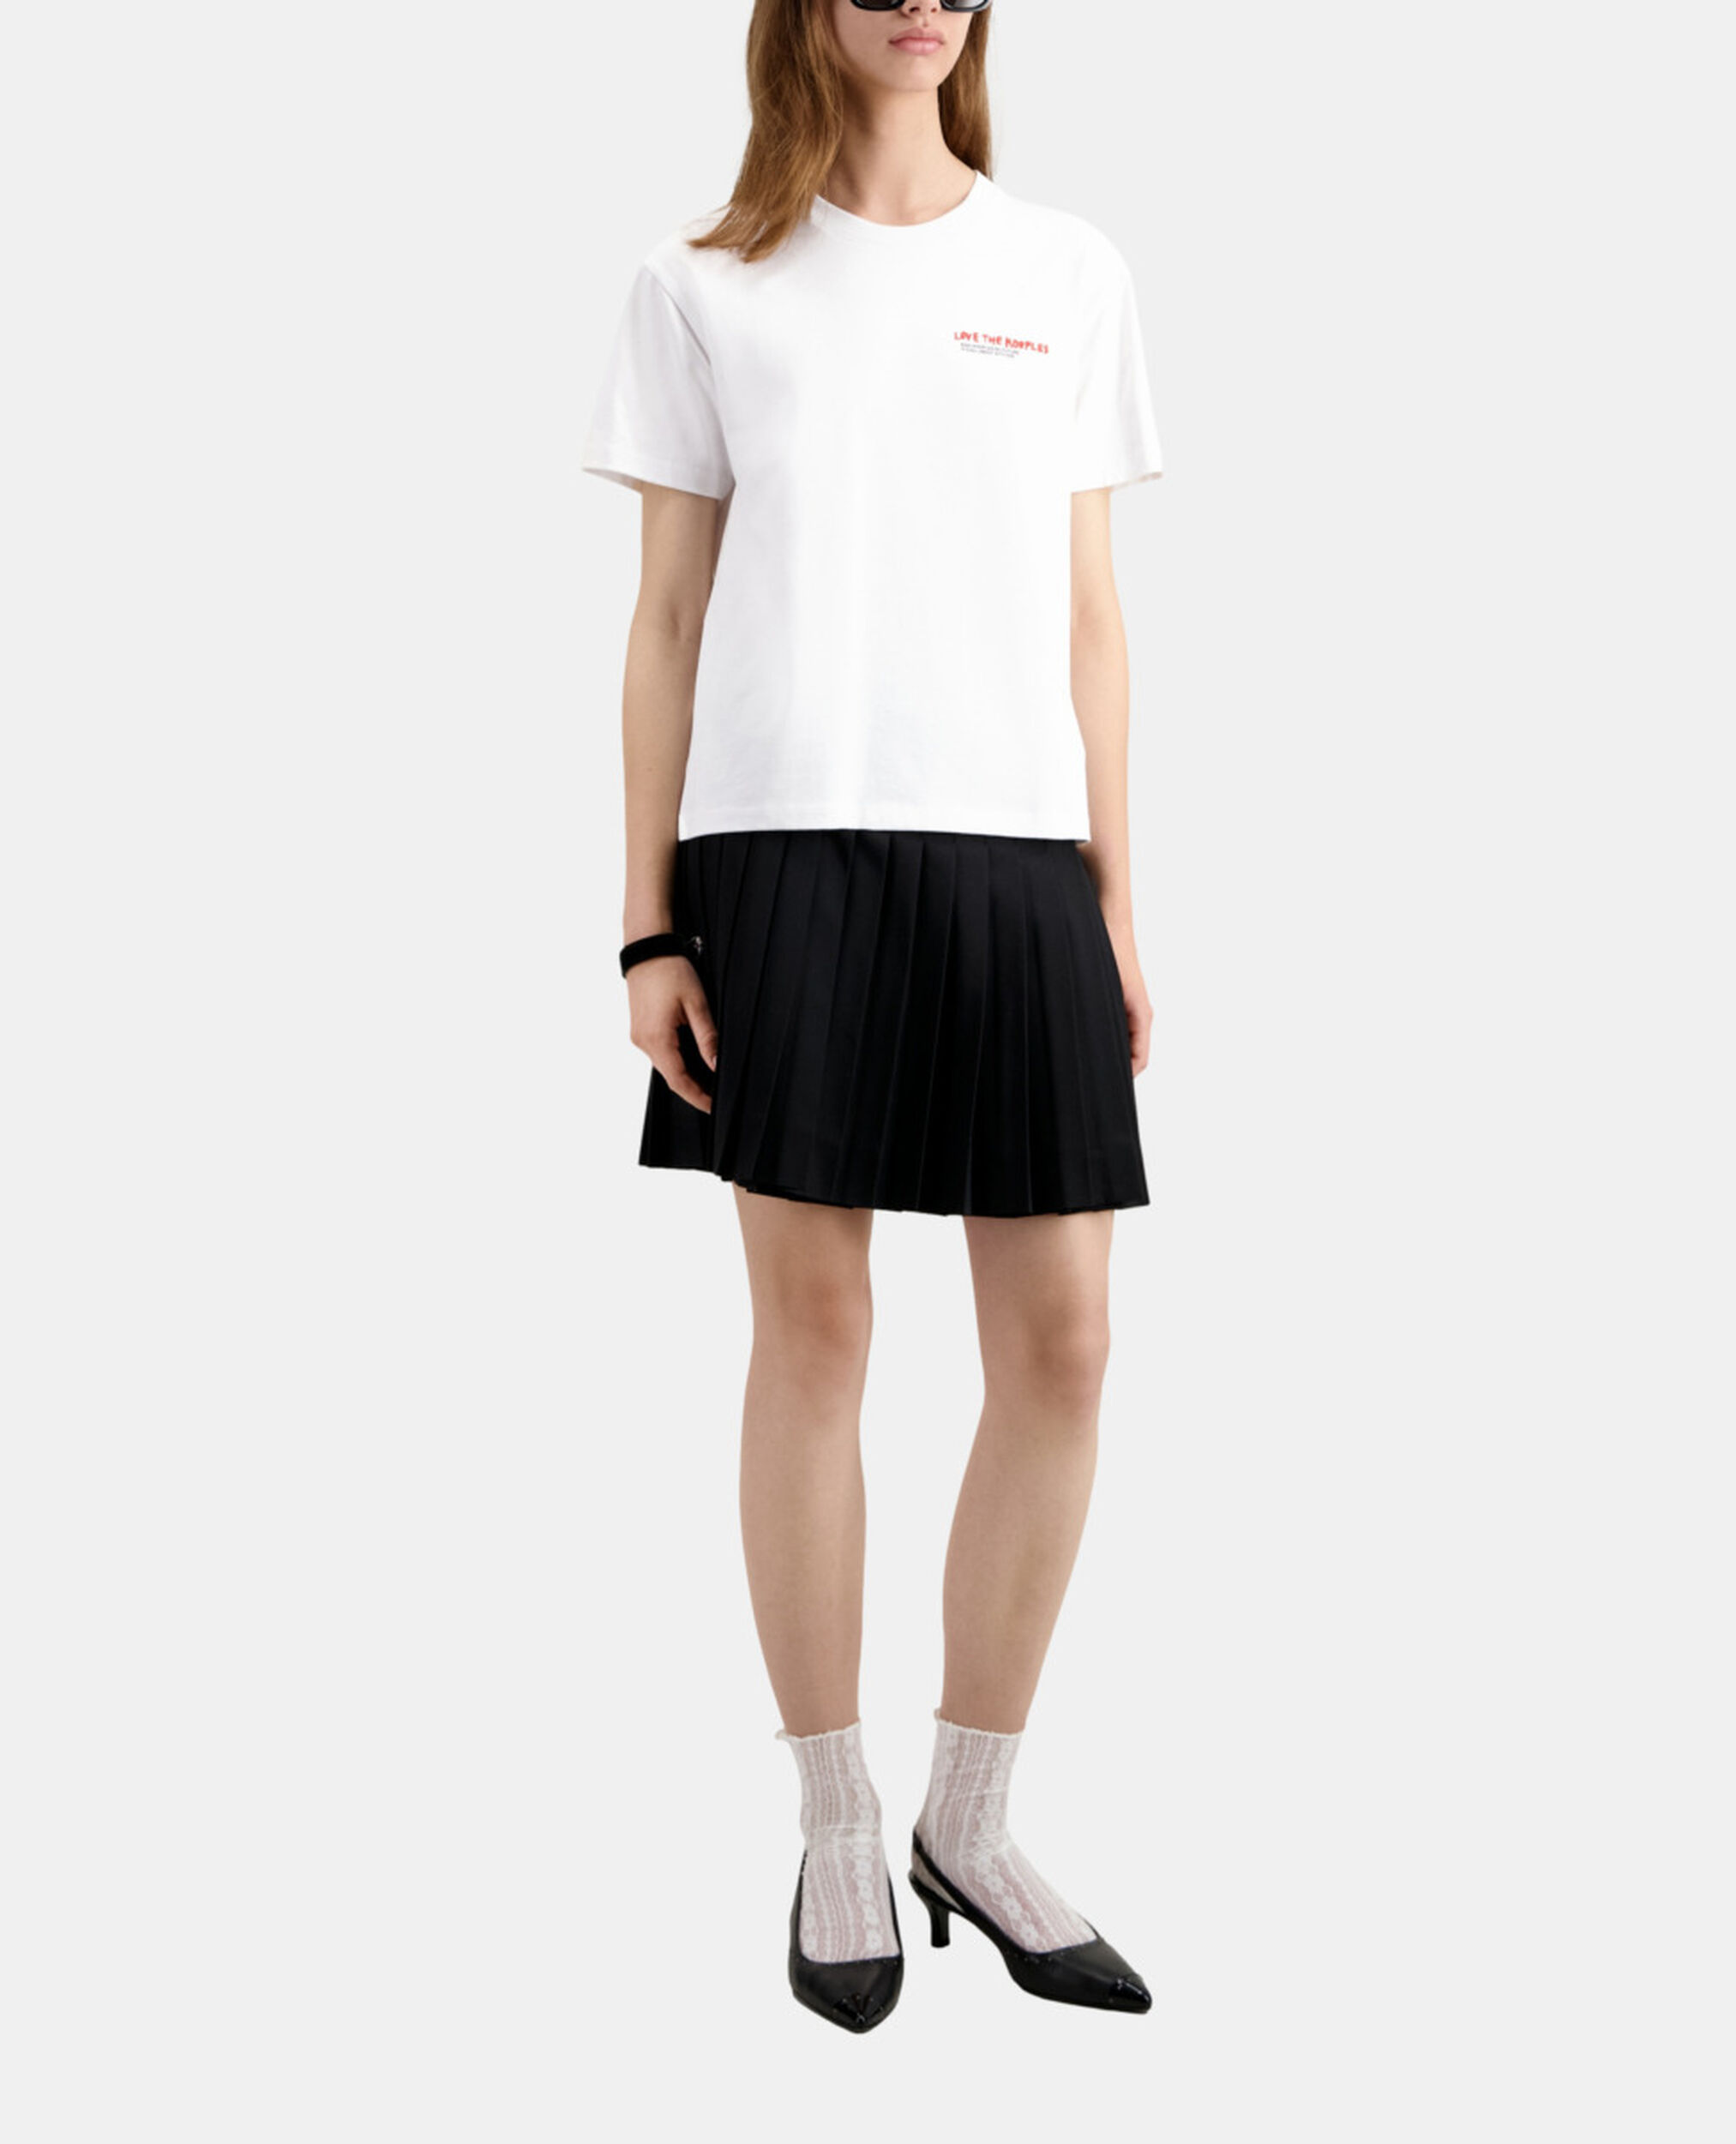 Camiseta I Love The Kooples blanca para mujer, WHITE, hi-res image number null